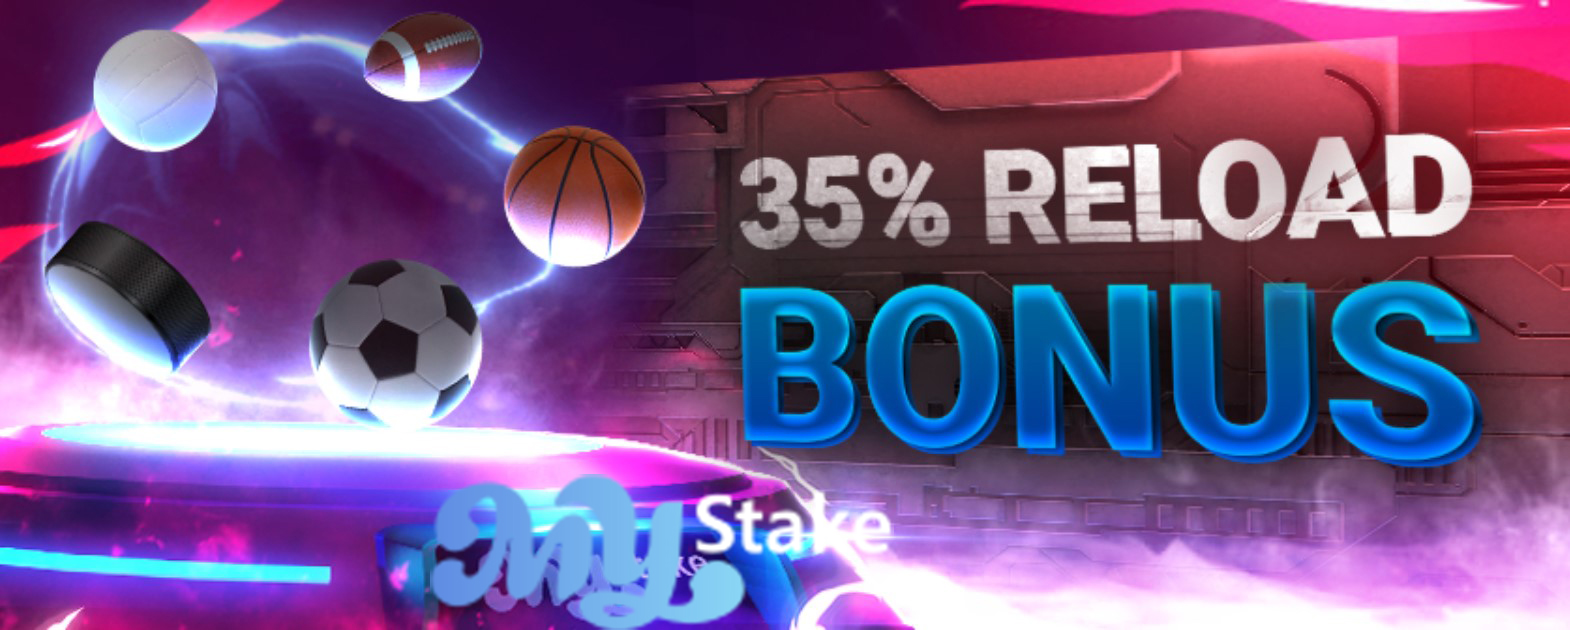 MyStake Reload bonus 35%